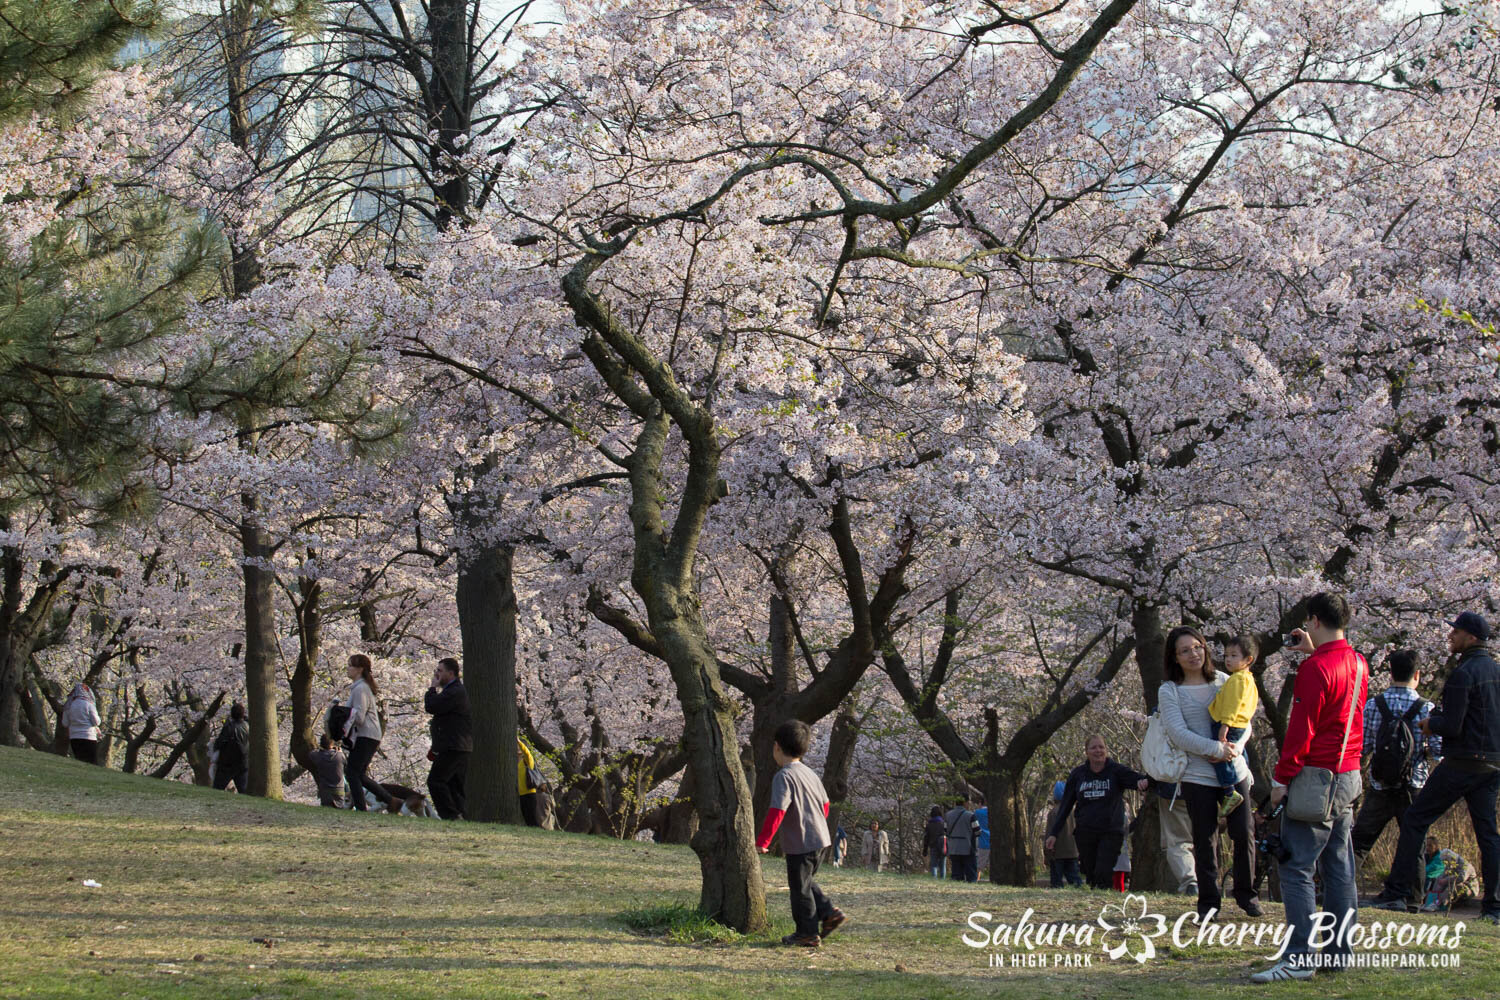  Sakura // Cherry Blossoms in High Park - April 19, 2012 - www.SakurainHighPark.com  Sakura // Cherry Blossoms in High Park - April 14, 2012 - www.SakurainHighPark.com 